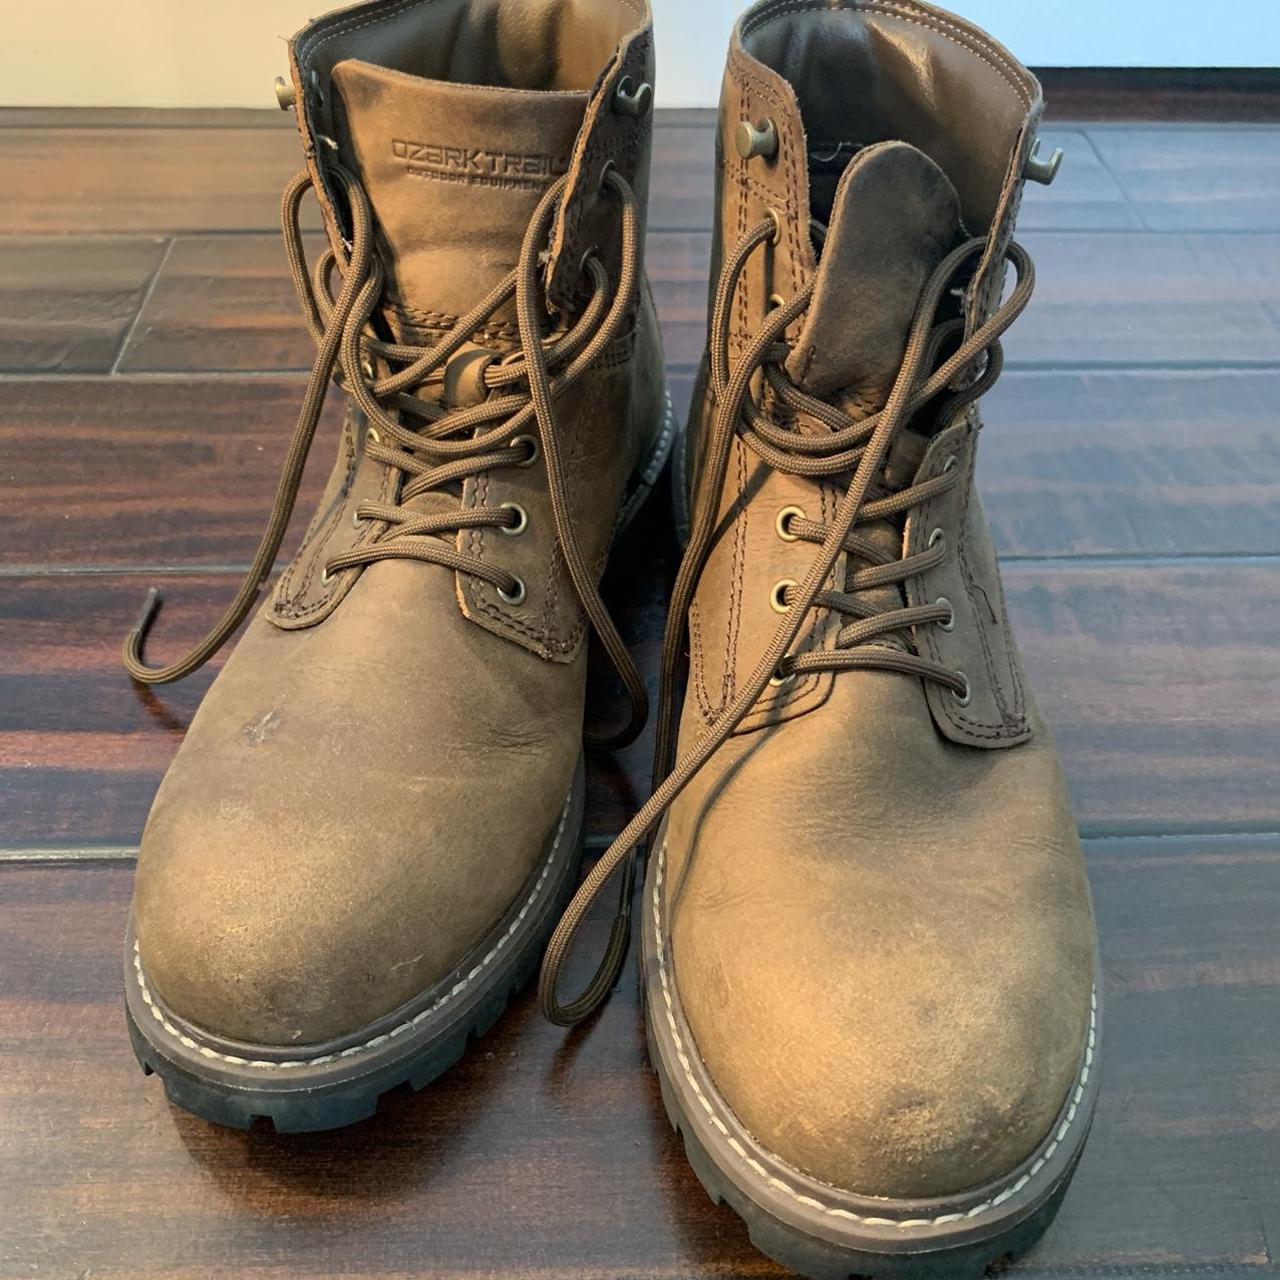 Ozark trail brown boots - Depop